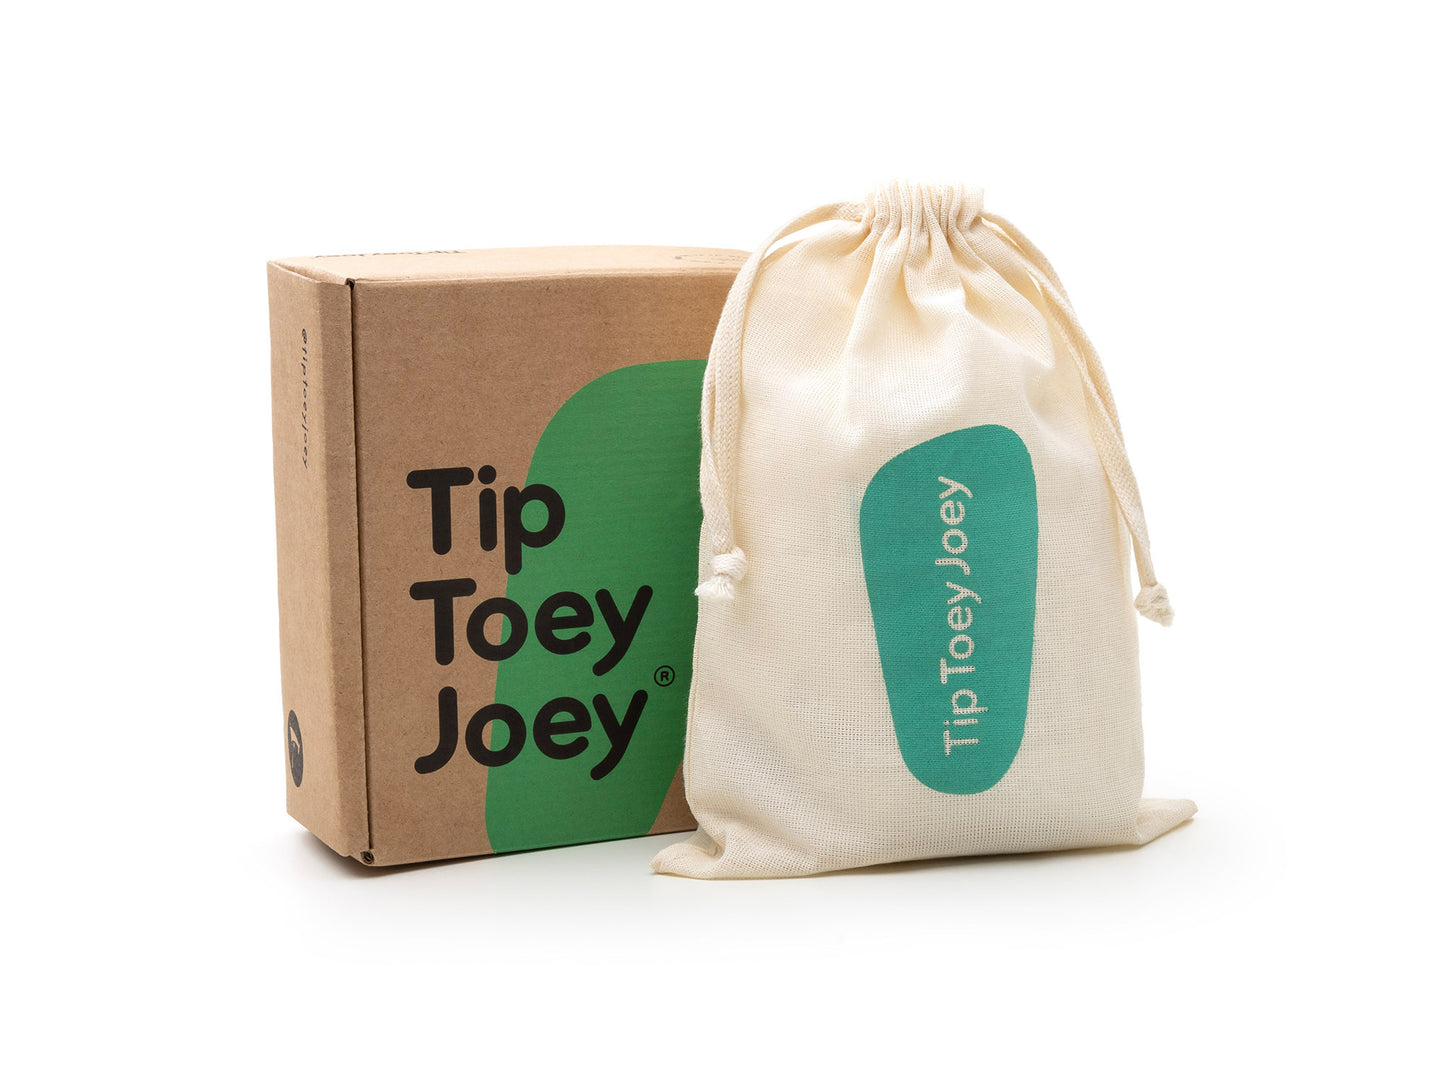 Botas Dobby Caramelo - Tip Toey Joey